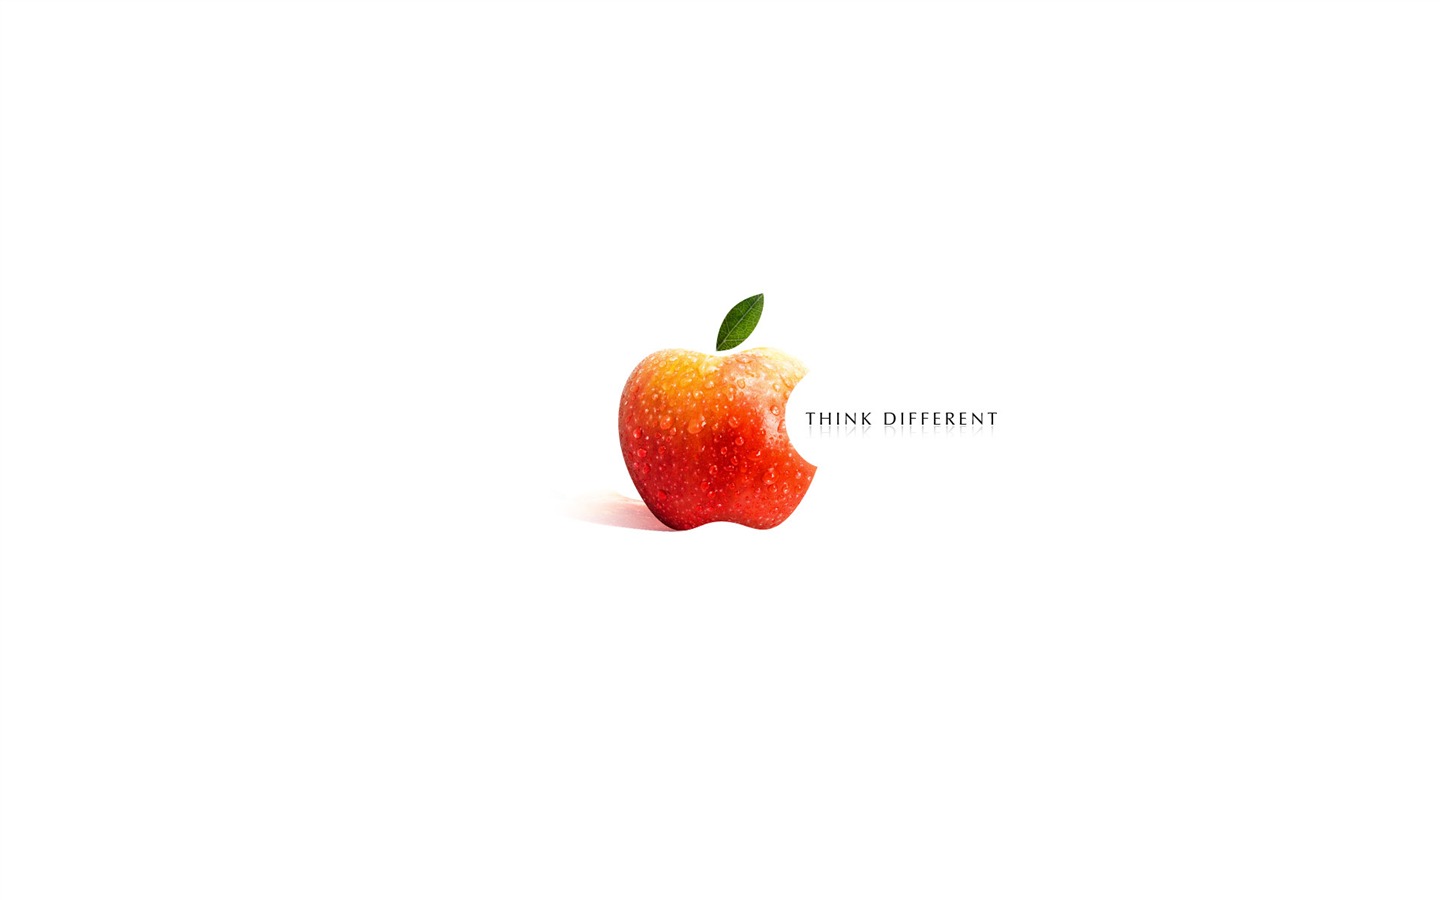 Apple theme wallpaper album (29) #10 - 1440x900